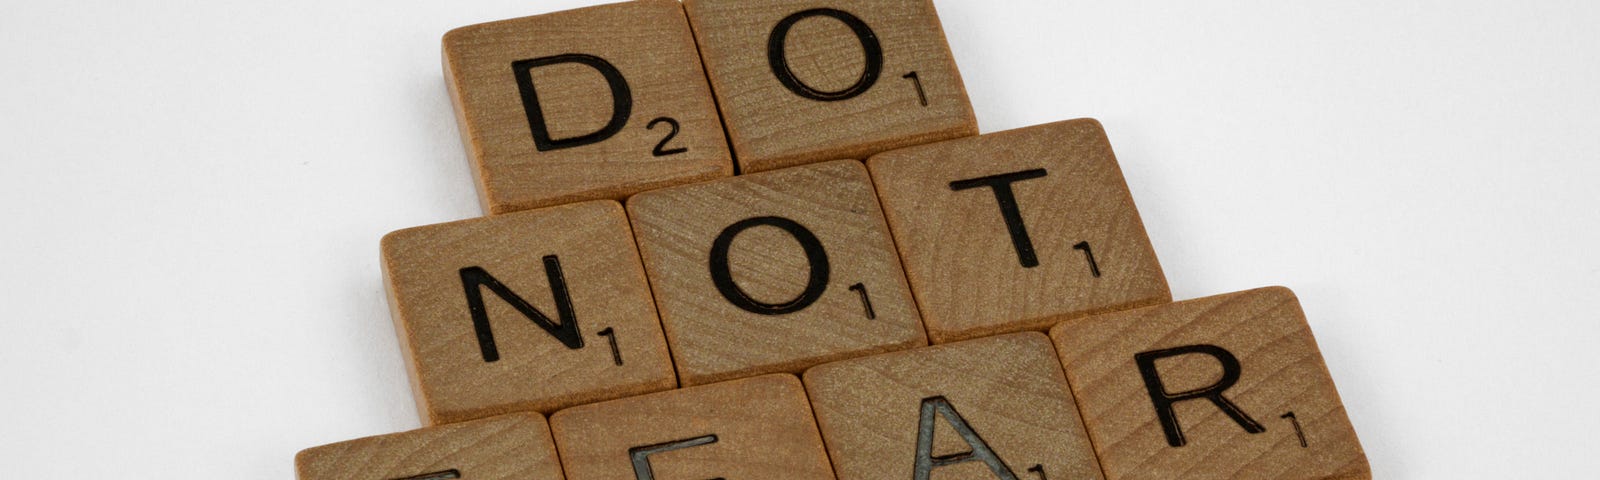 Scrabble tiles spelling out DO NOT FEAR